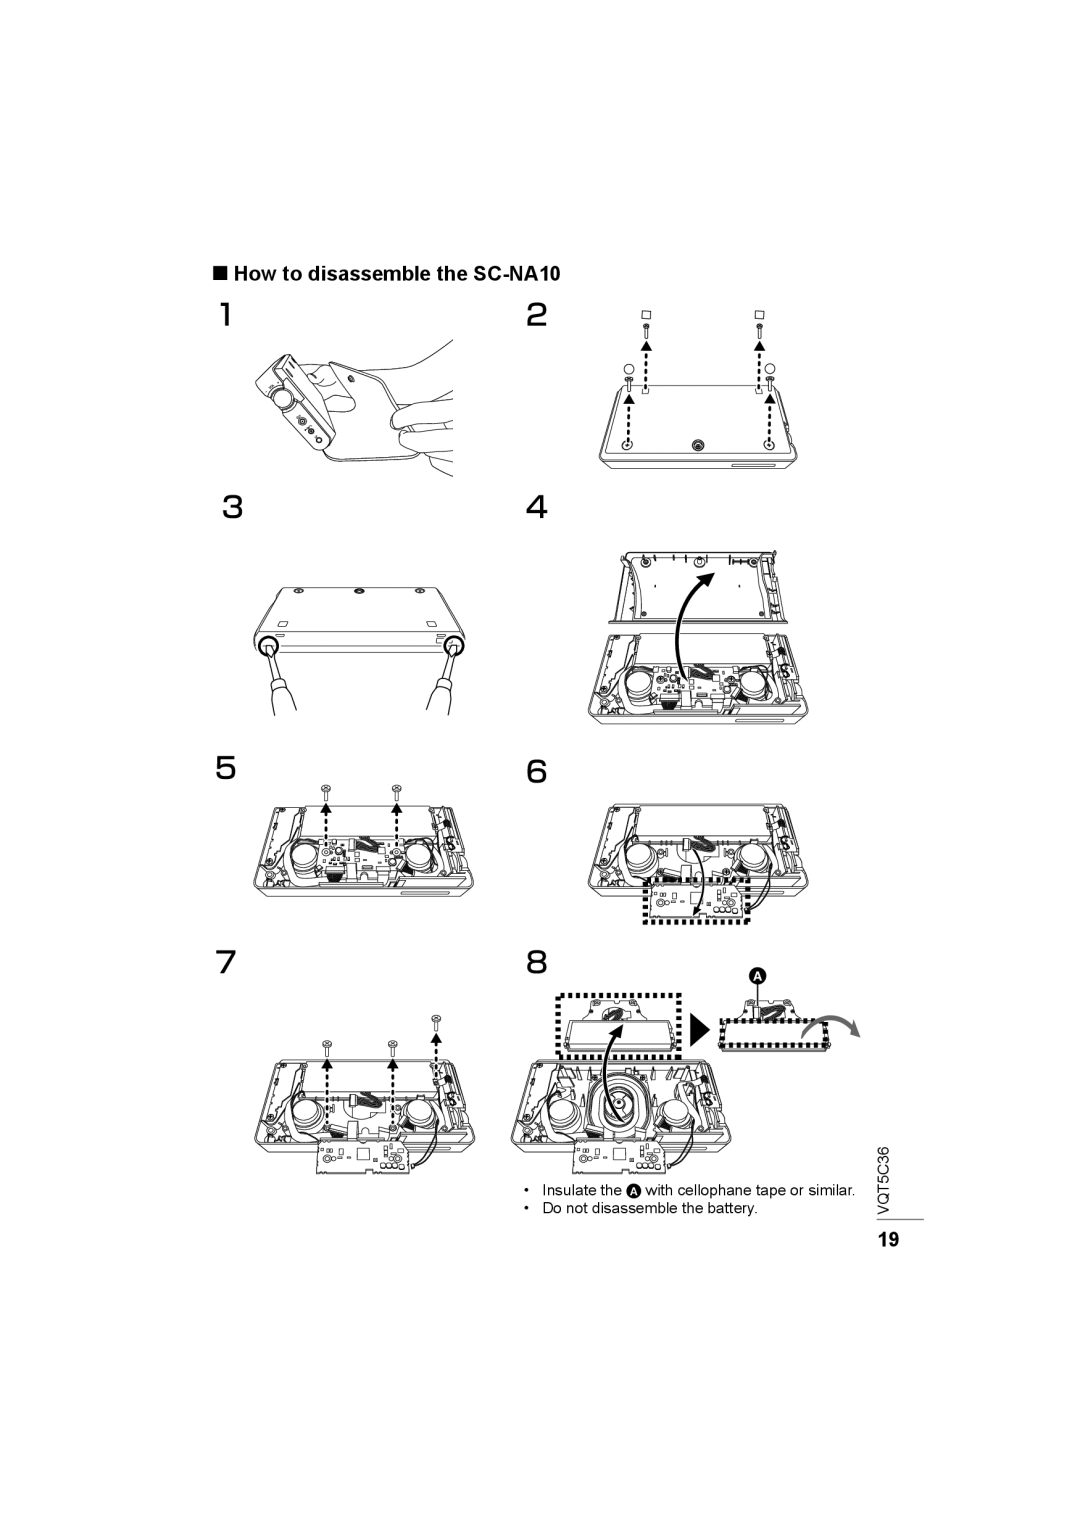 Panasonic SC-NA30 owner manual How to disassemble the SC-NA10 